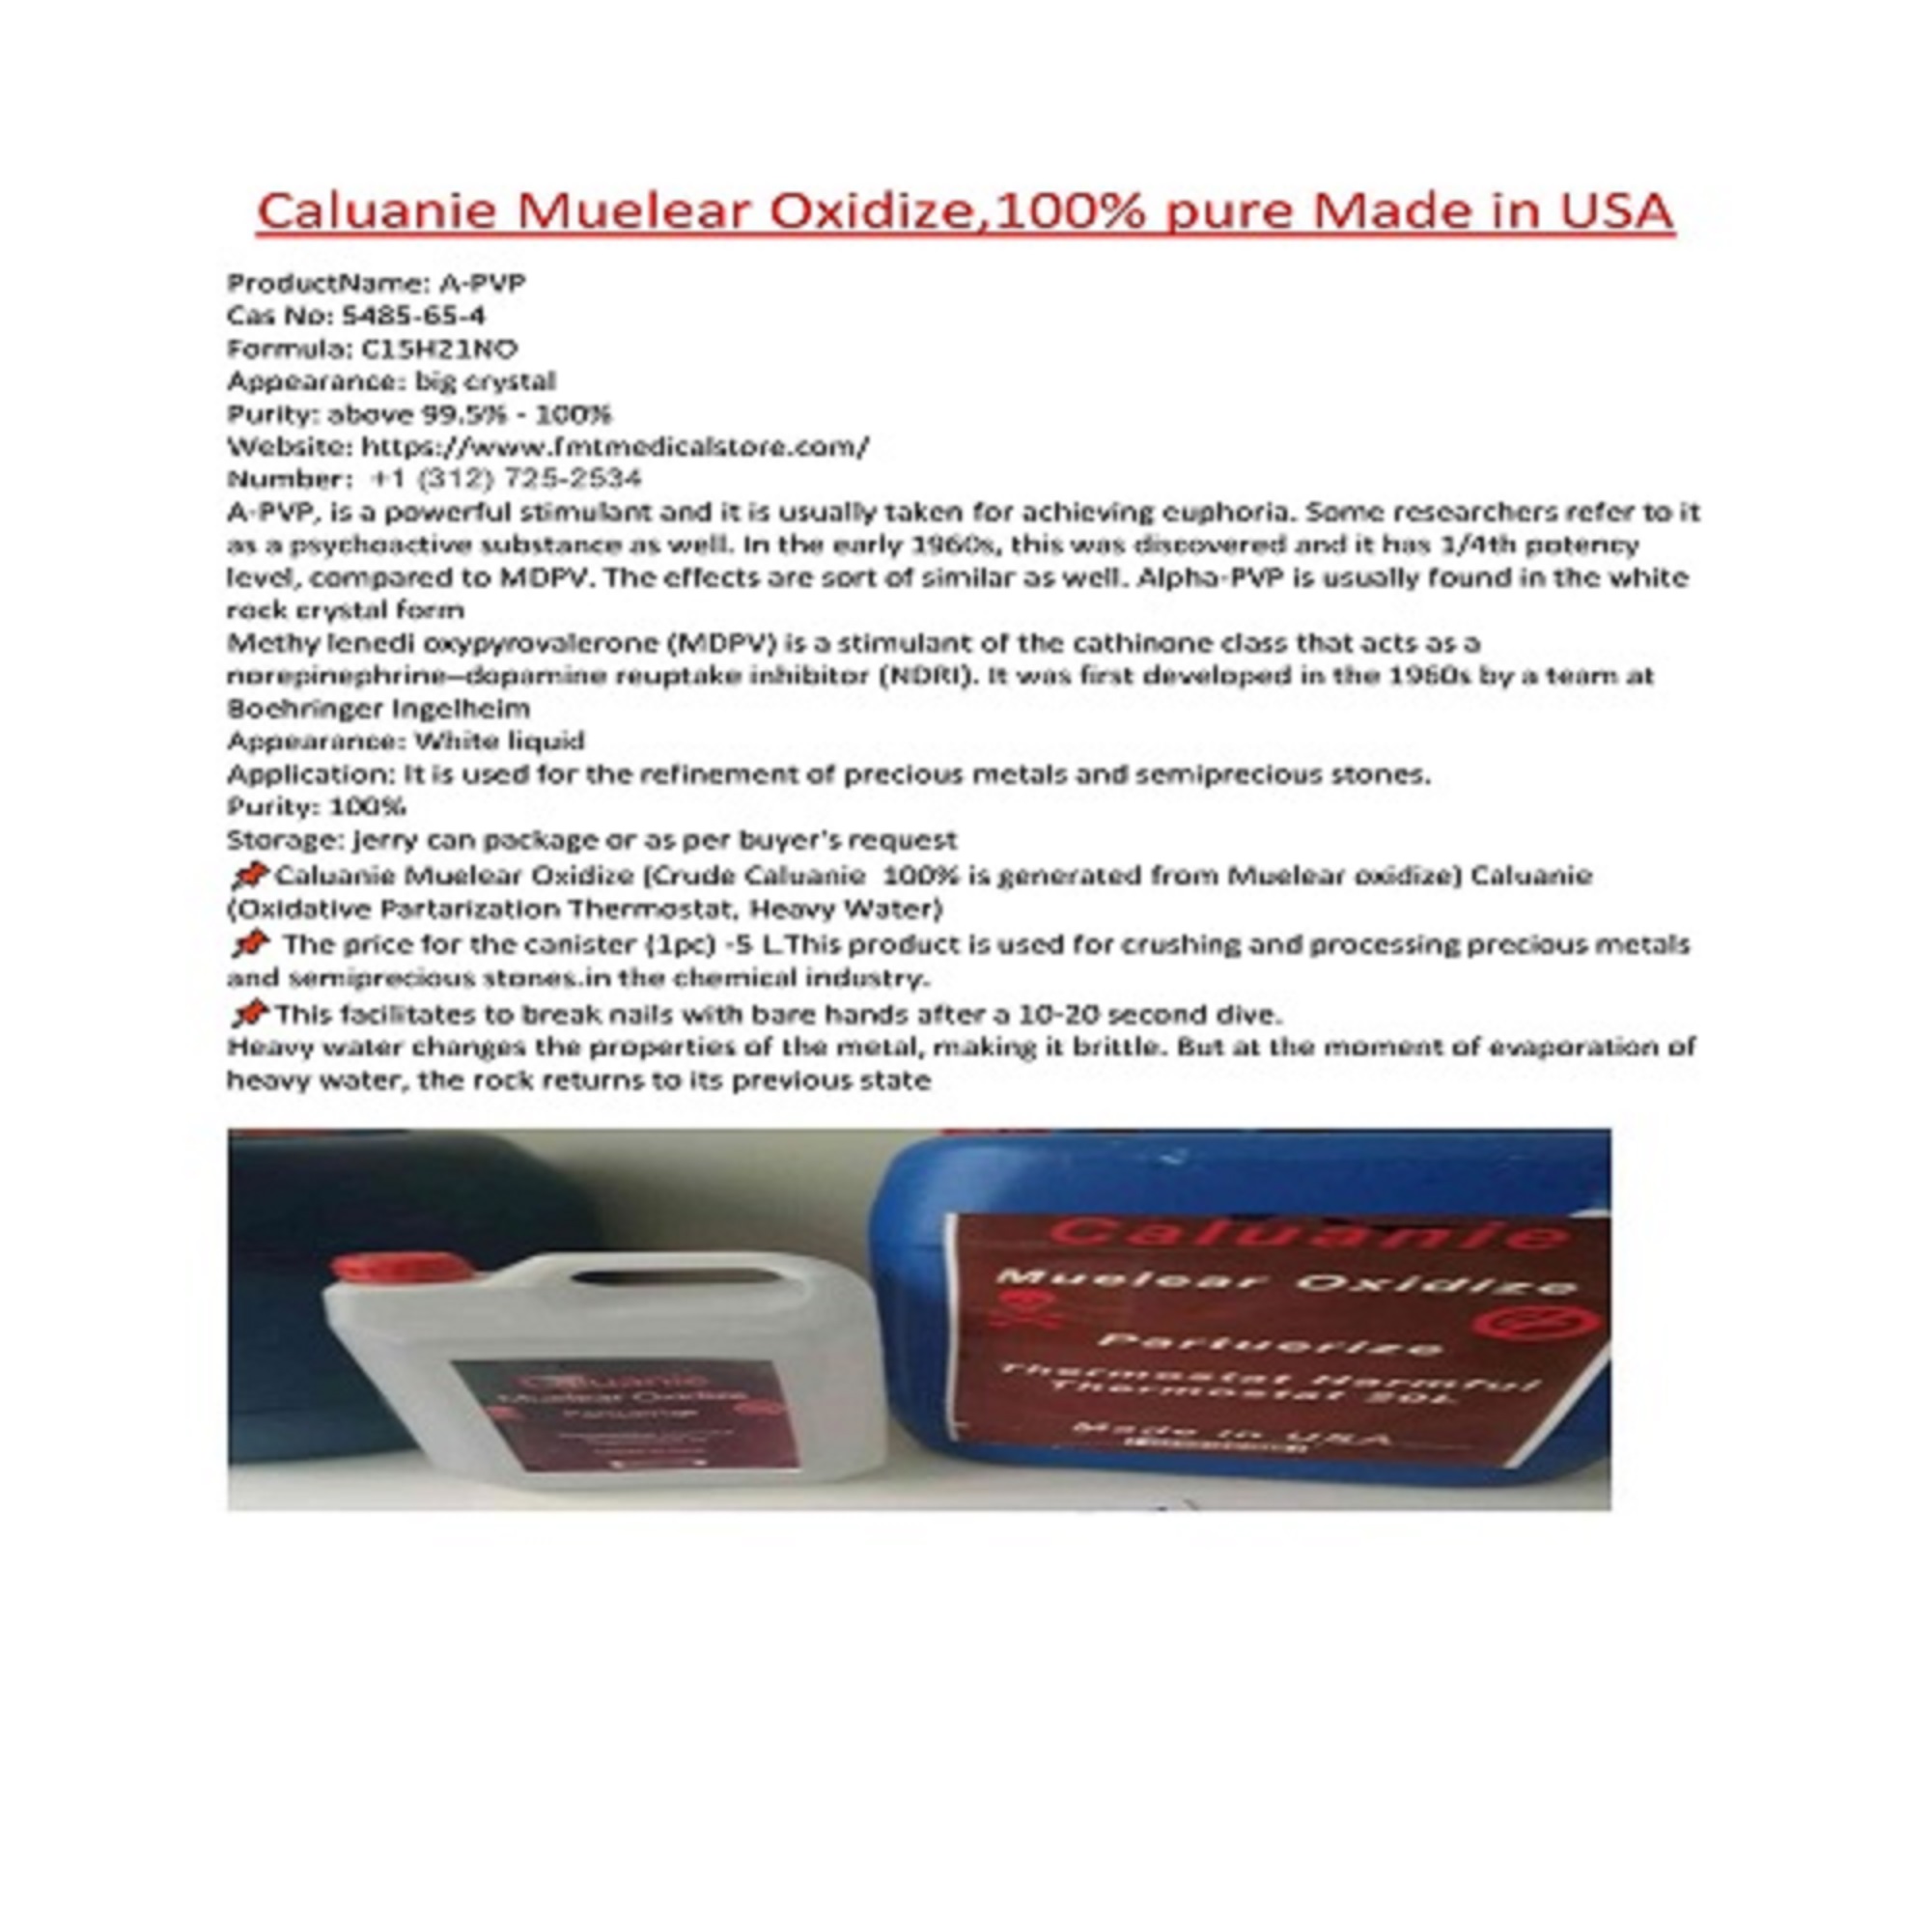 Mua Caluanie Muelear Oxidize 5L 100 trực tuyến một c&aacutech an to&agraven